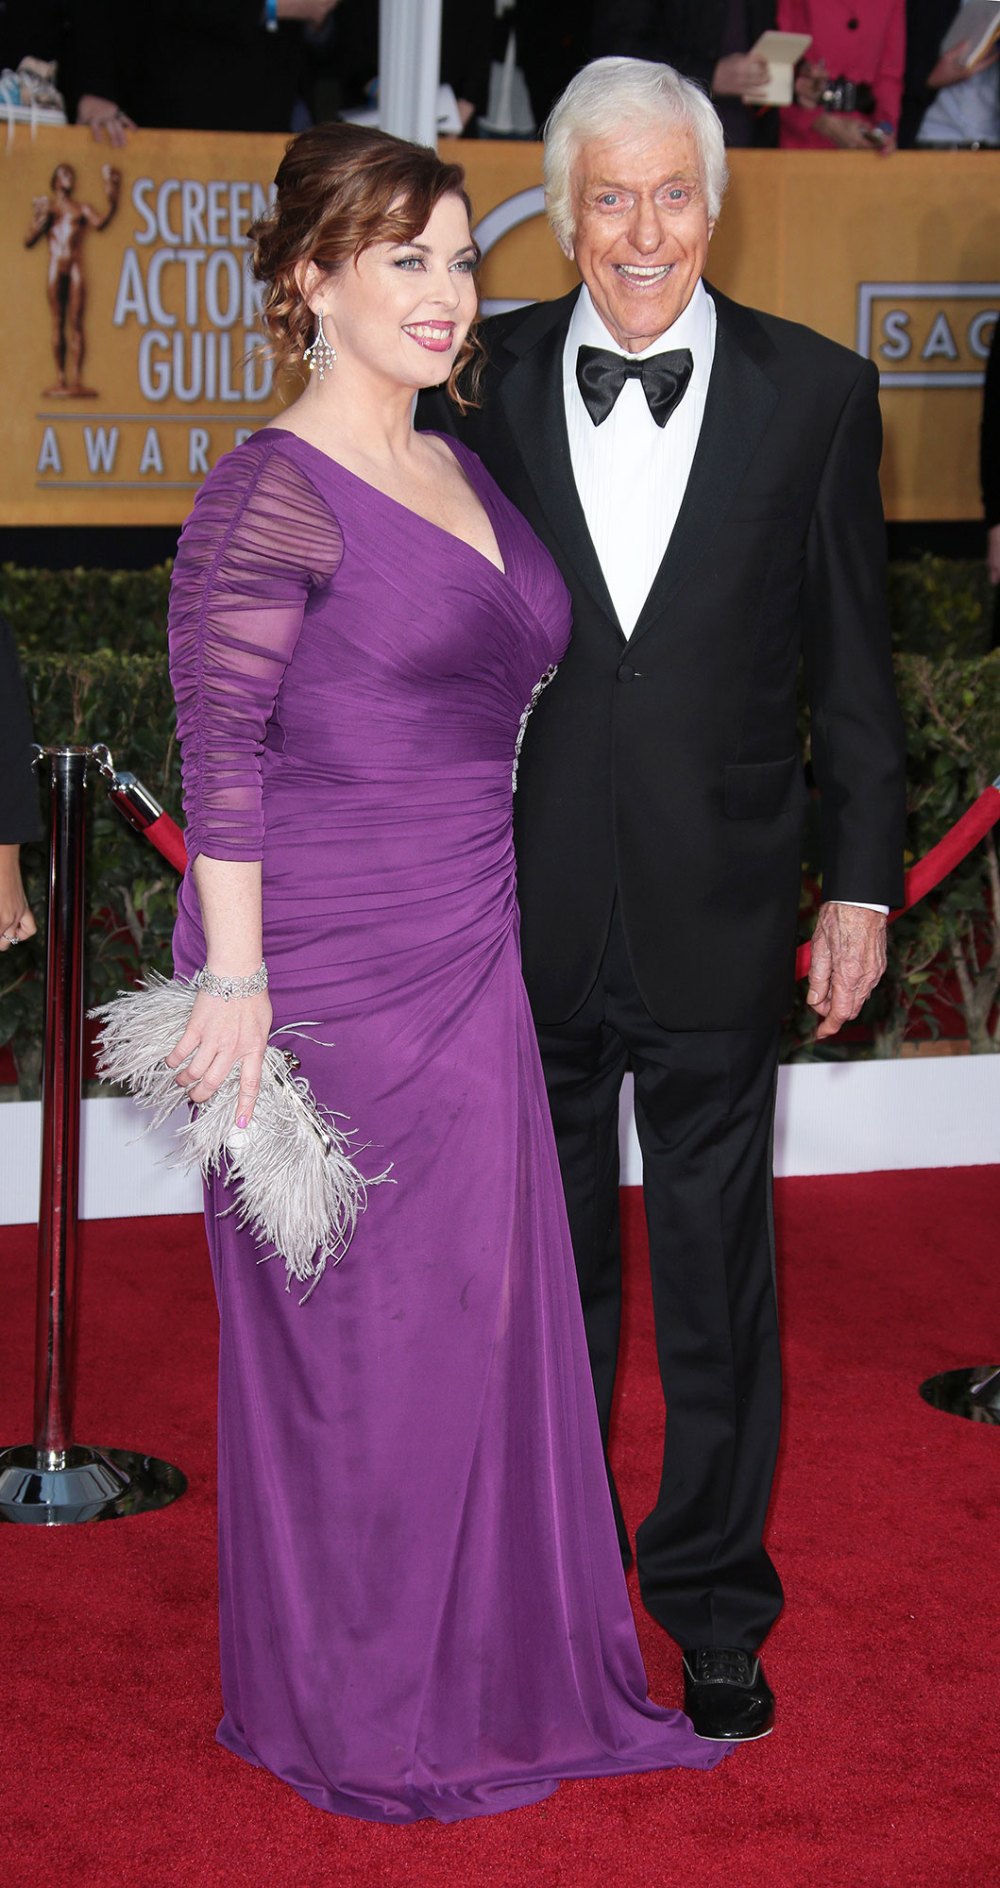 Dick Van Dyke, 87, Kisses Wife, 41, at 2013 SAG Awards: Picture